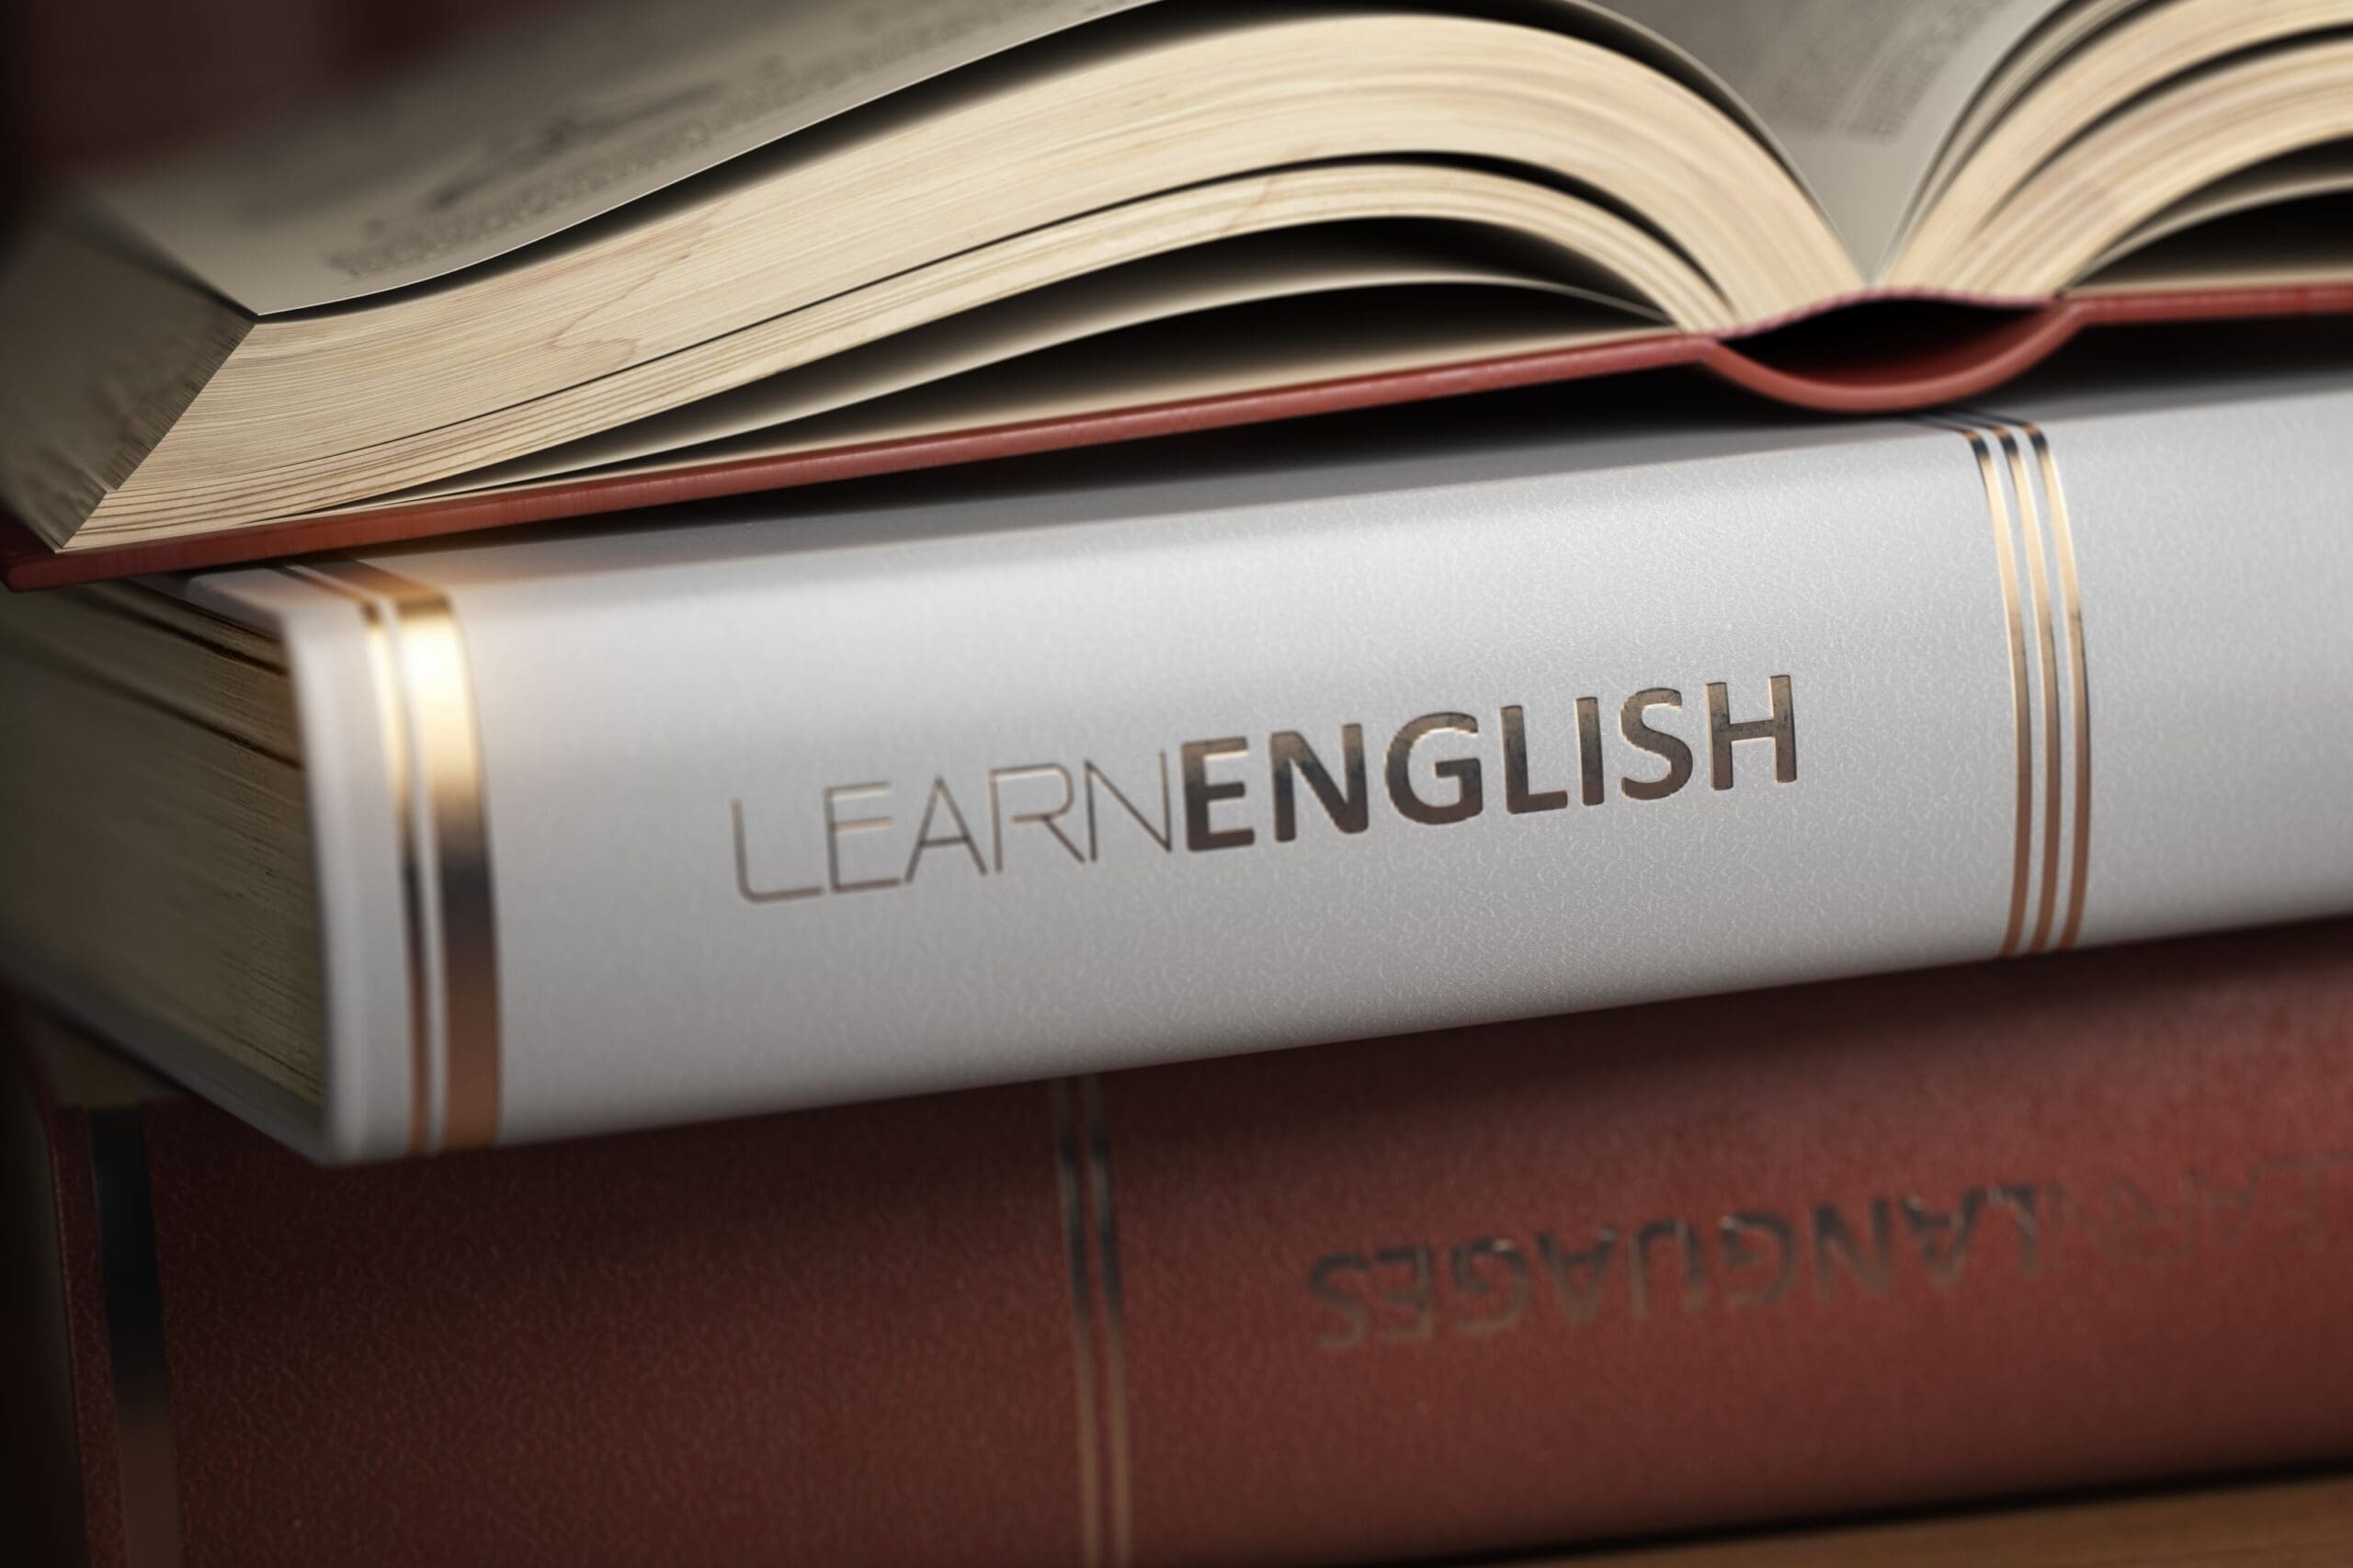 learn-english-books-and-textbooks-for-english-stu-2023-11-27-04-56-45-utc